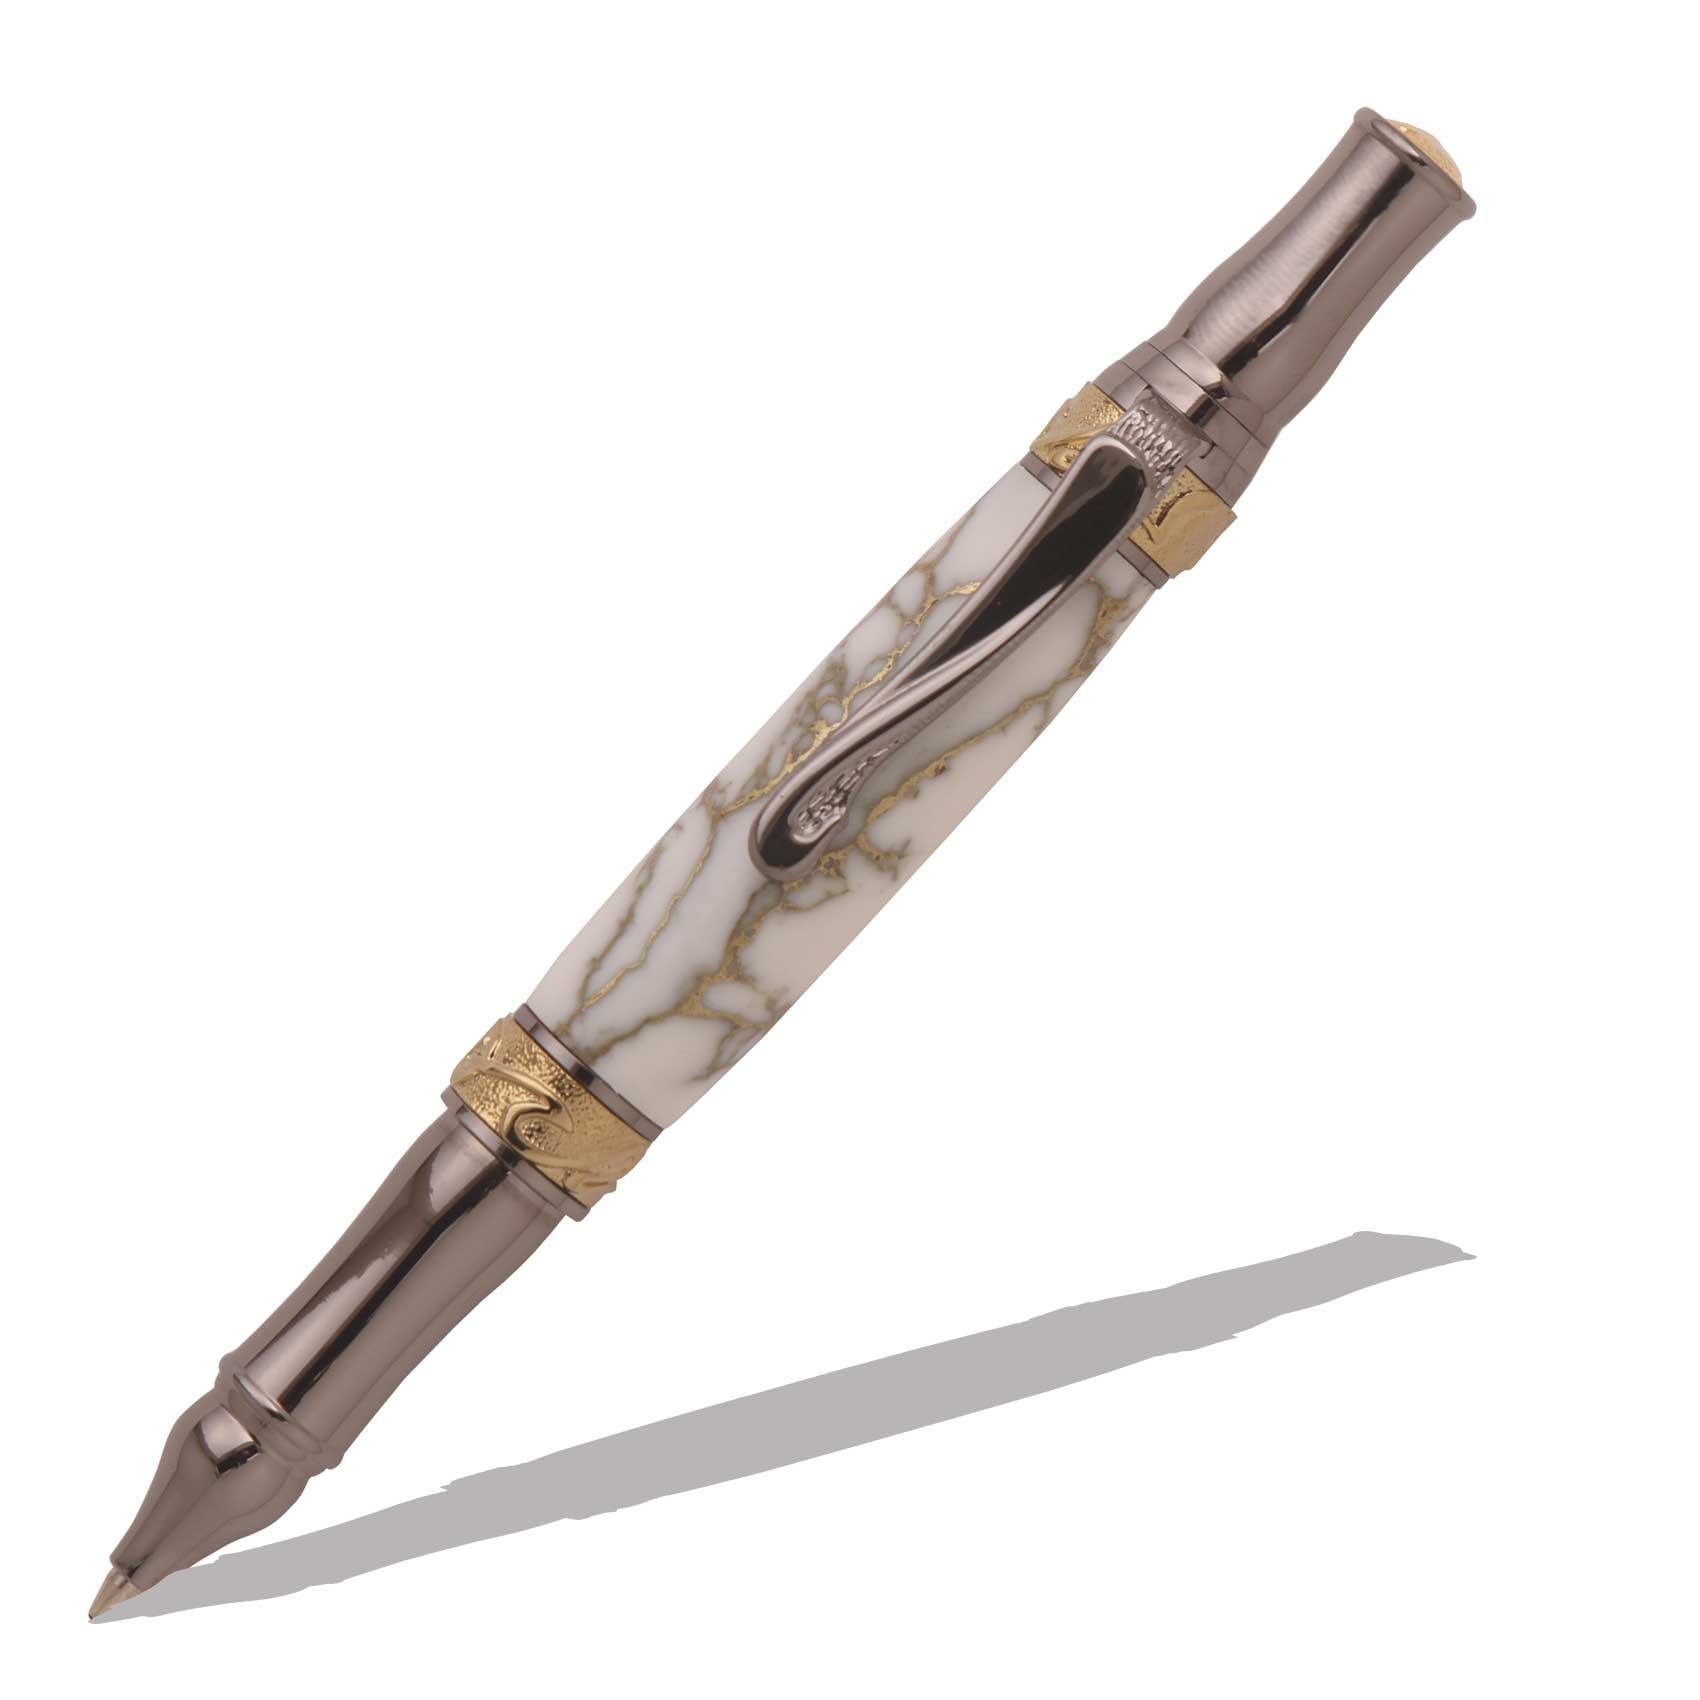 Nouveau Sceptre 24kt Gold and Gun Metal Ballpoint Twist Pen Kit  Item #: PKDBN6B